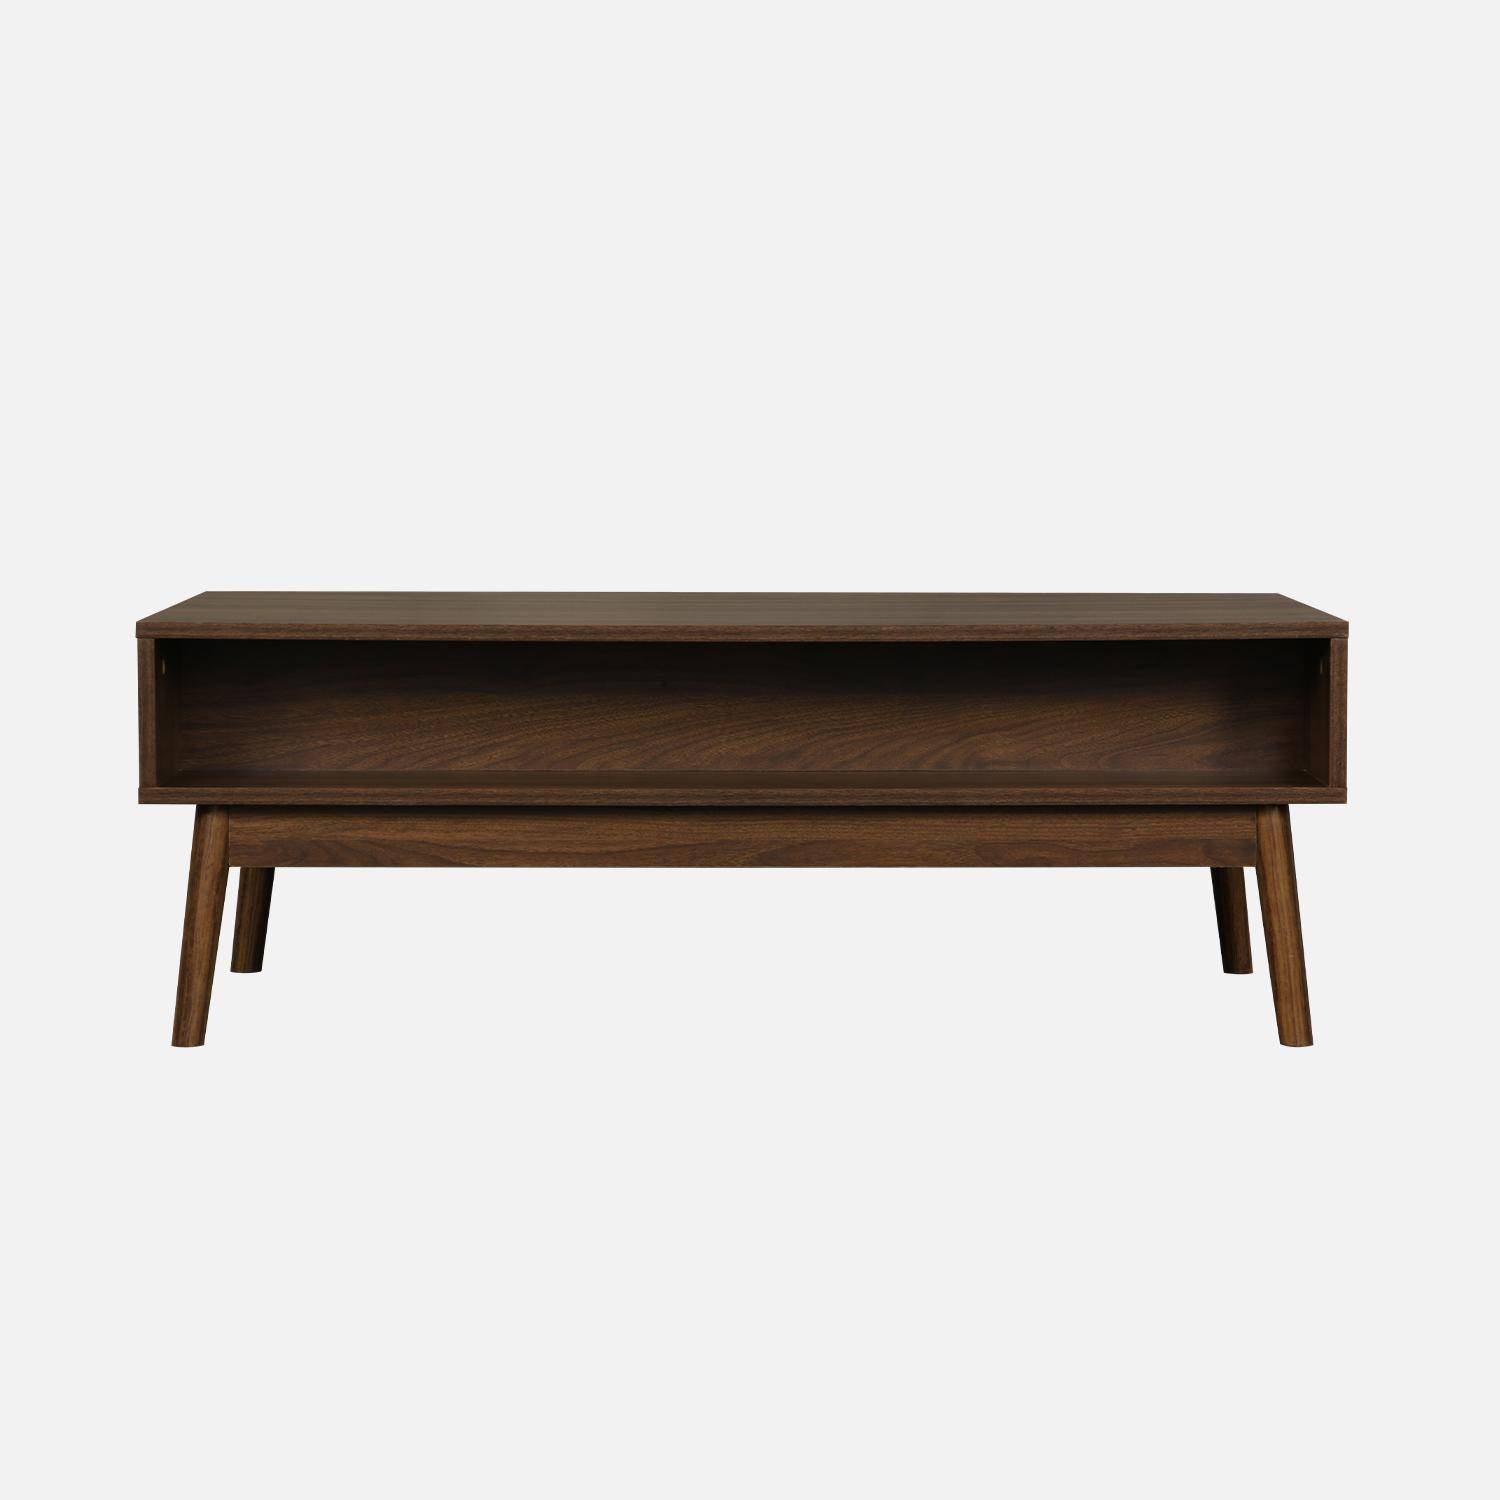 Wooden coffee table with one drawer storage, dark wood, L110xW59xH39cm,sweeek,Photo7